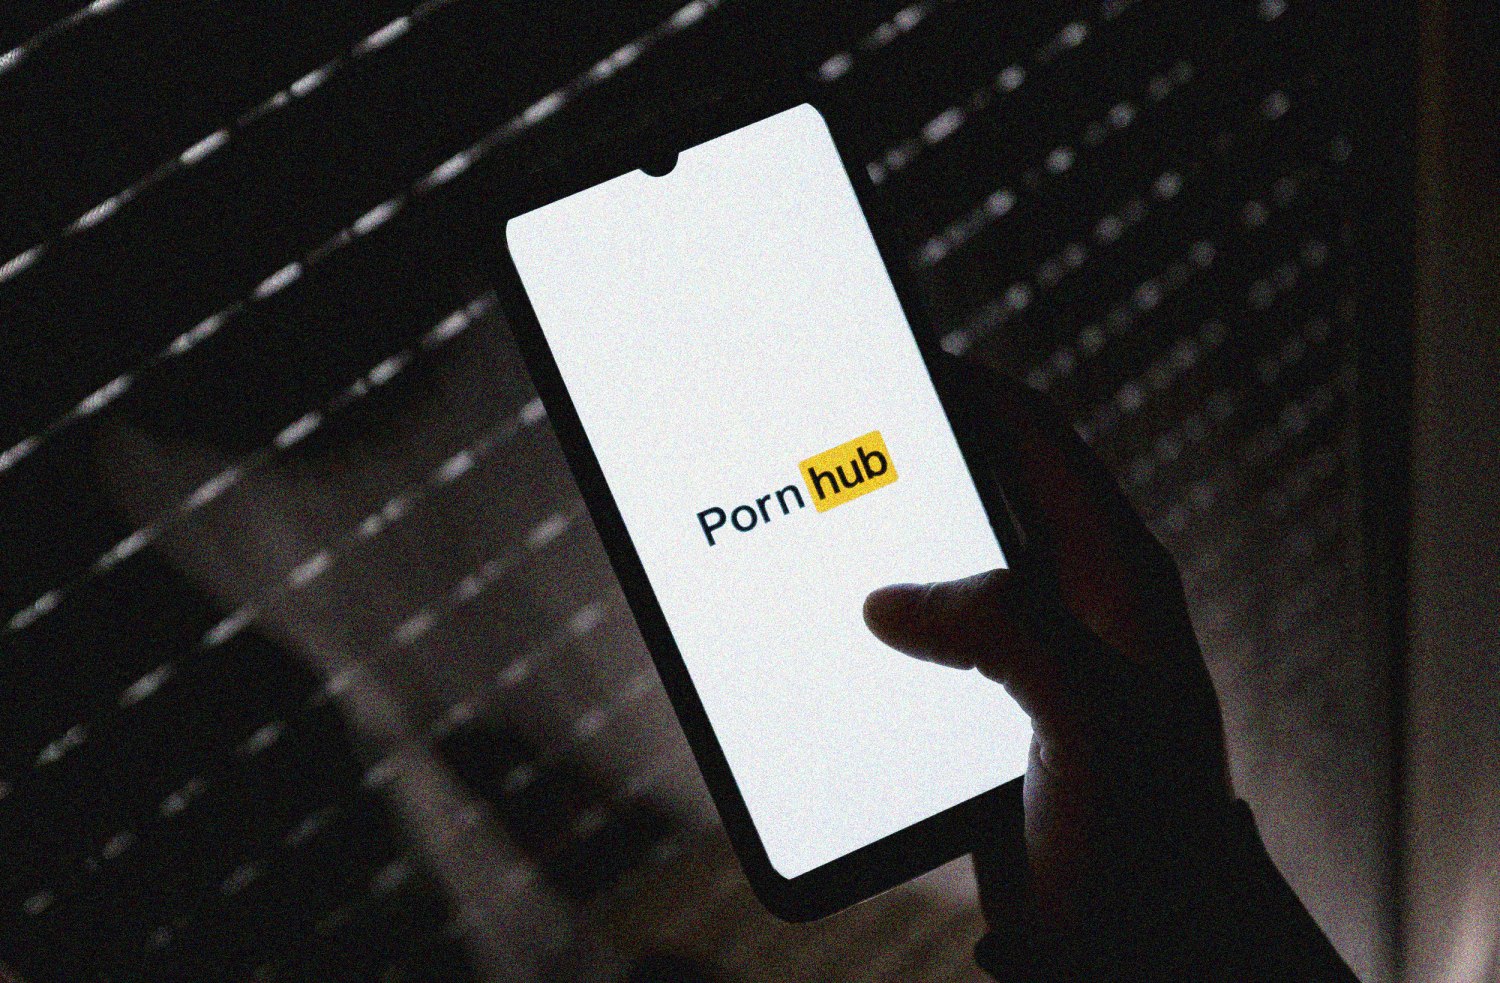 Www Pornhuq Com - Meet Pornhub's new owner: Ethical Capital Partners